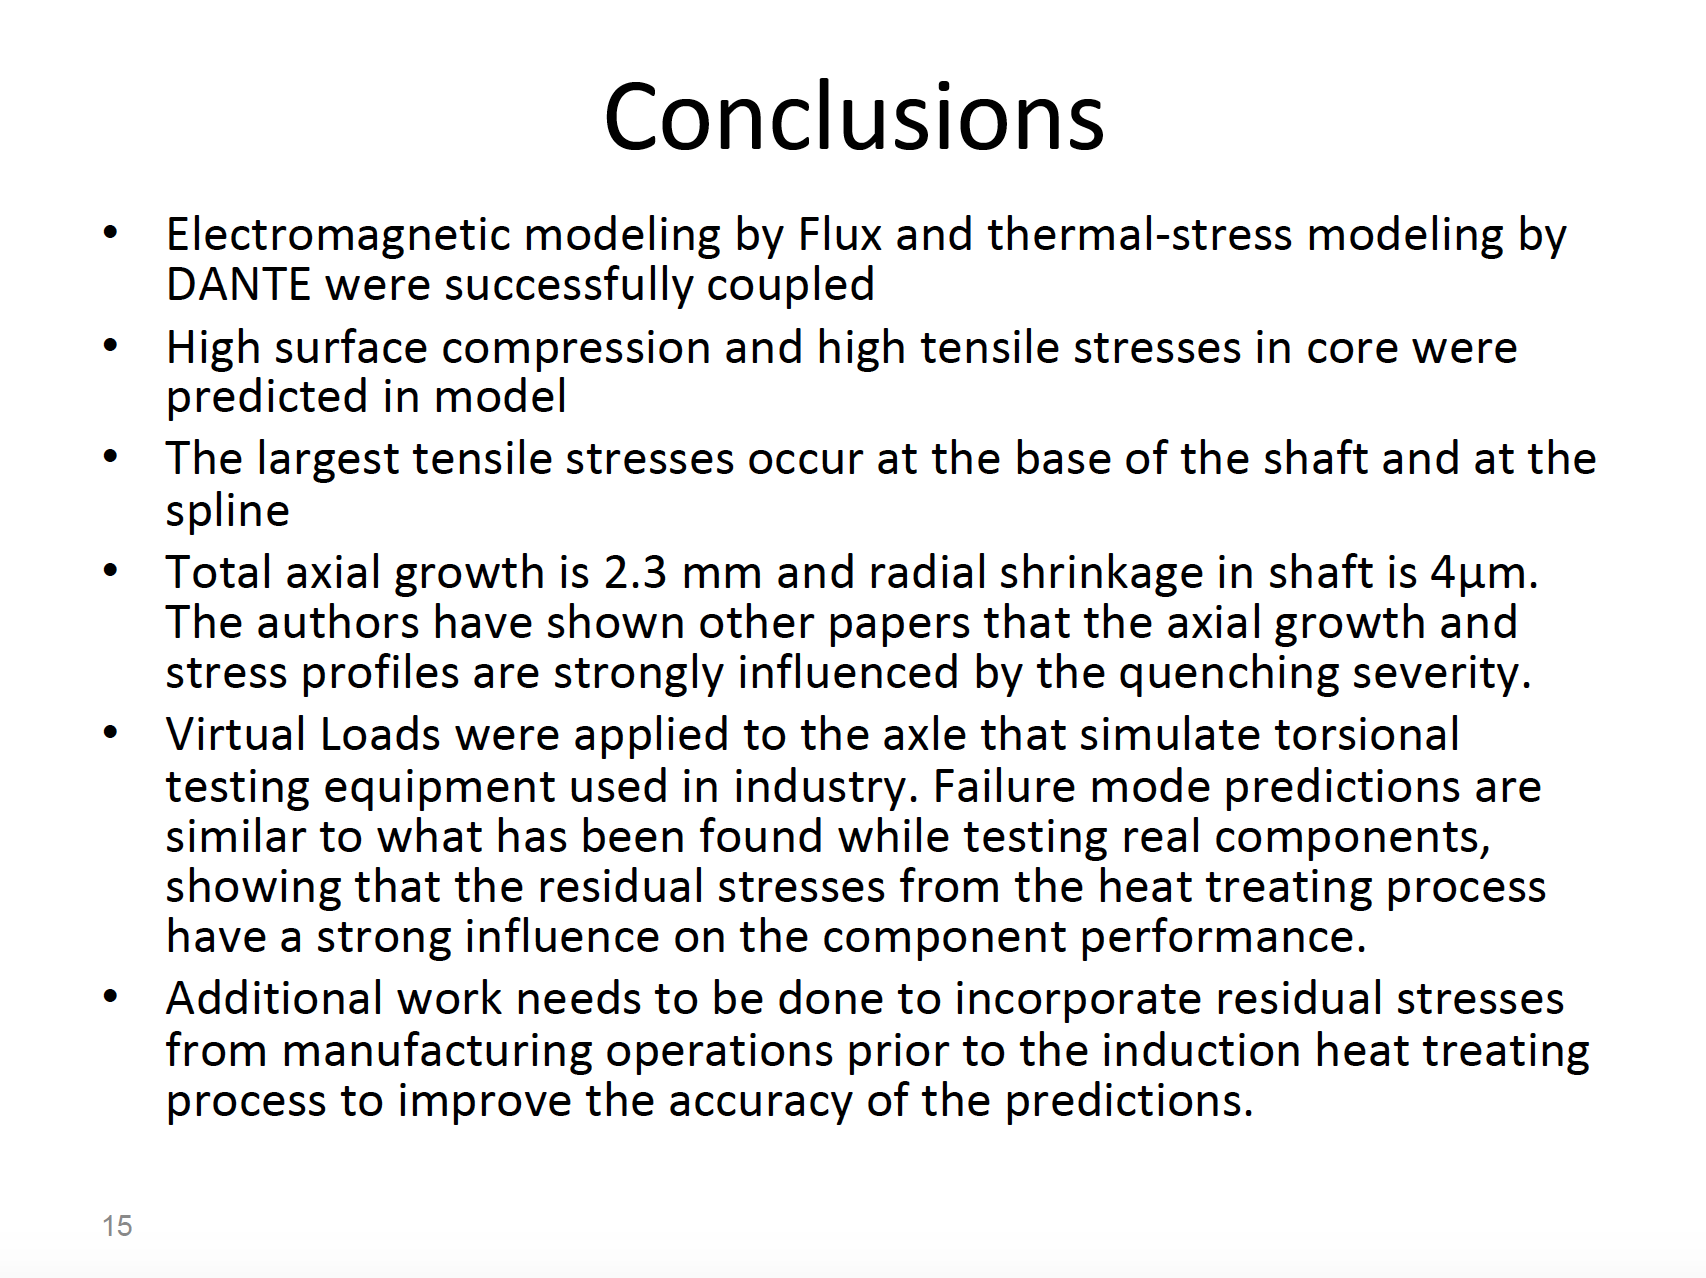 Fluxtrol | Integrated Computational Development of Induction Heat Treatment Process for Automotive Axle Shafts Figure 14 - Conclusions